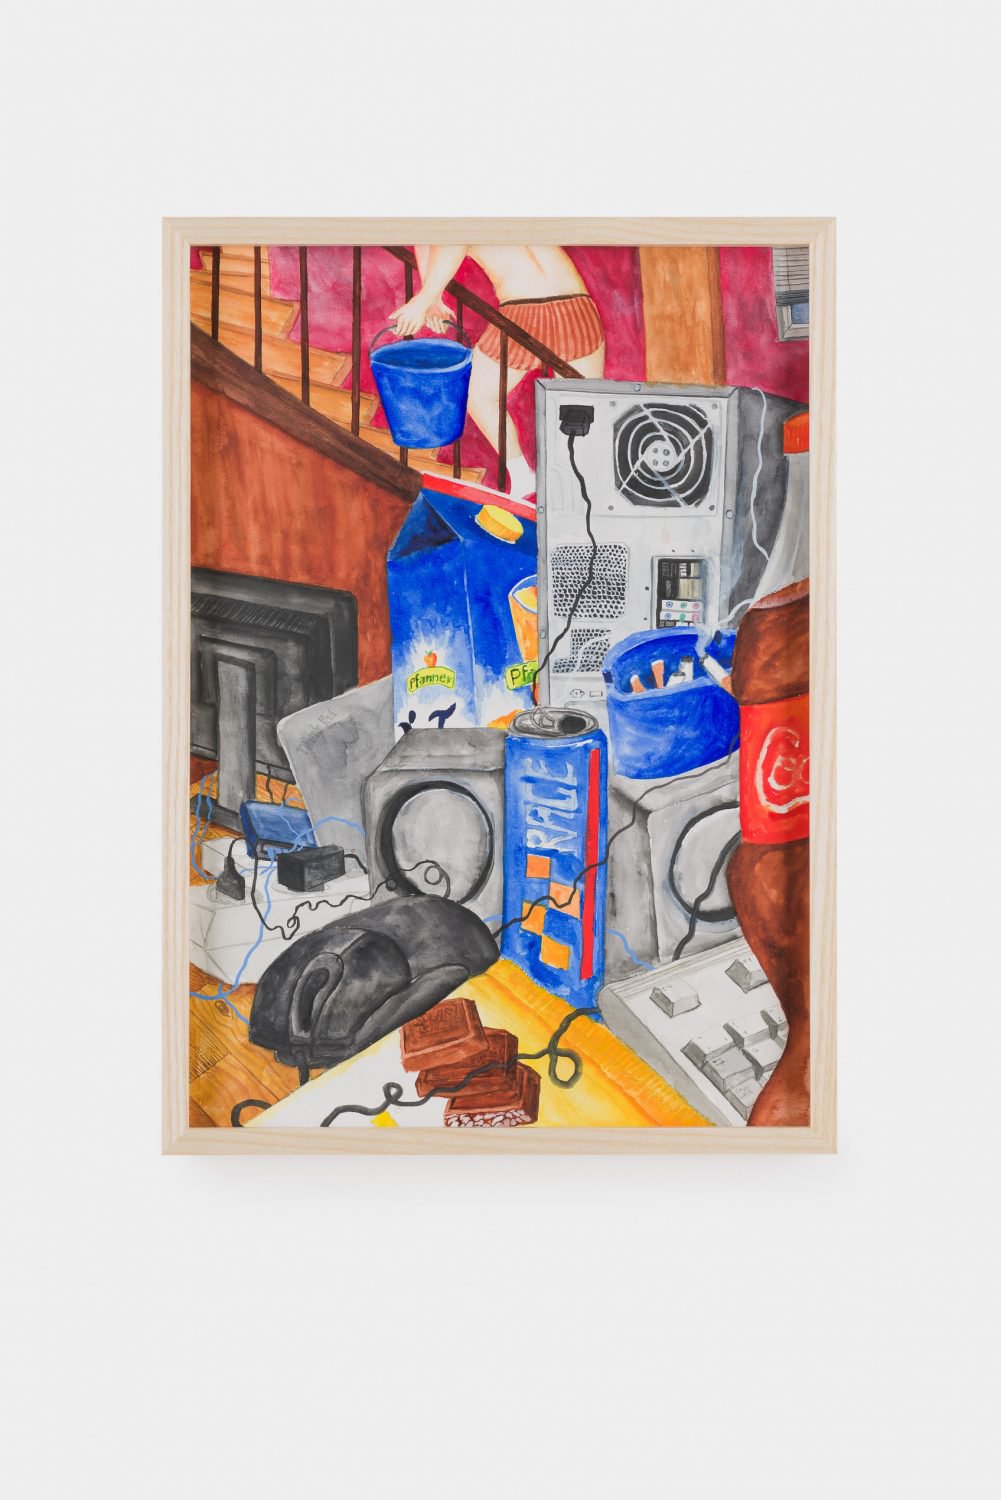 Matthias NogglerKotOR, 2018Watercolor and pencil on paper44.1 x 31.8 cm